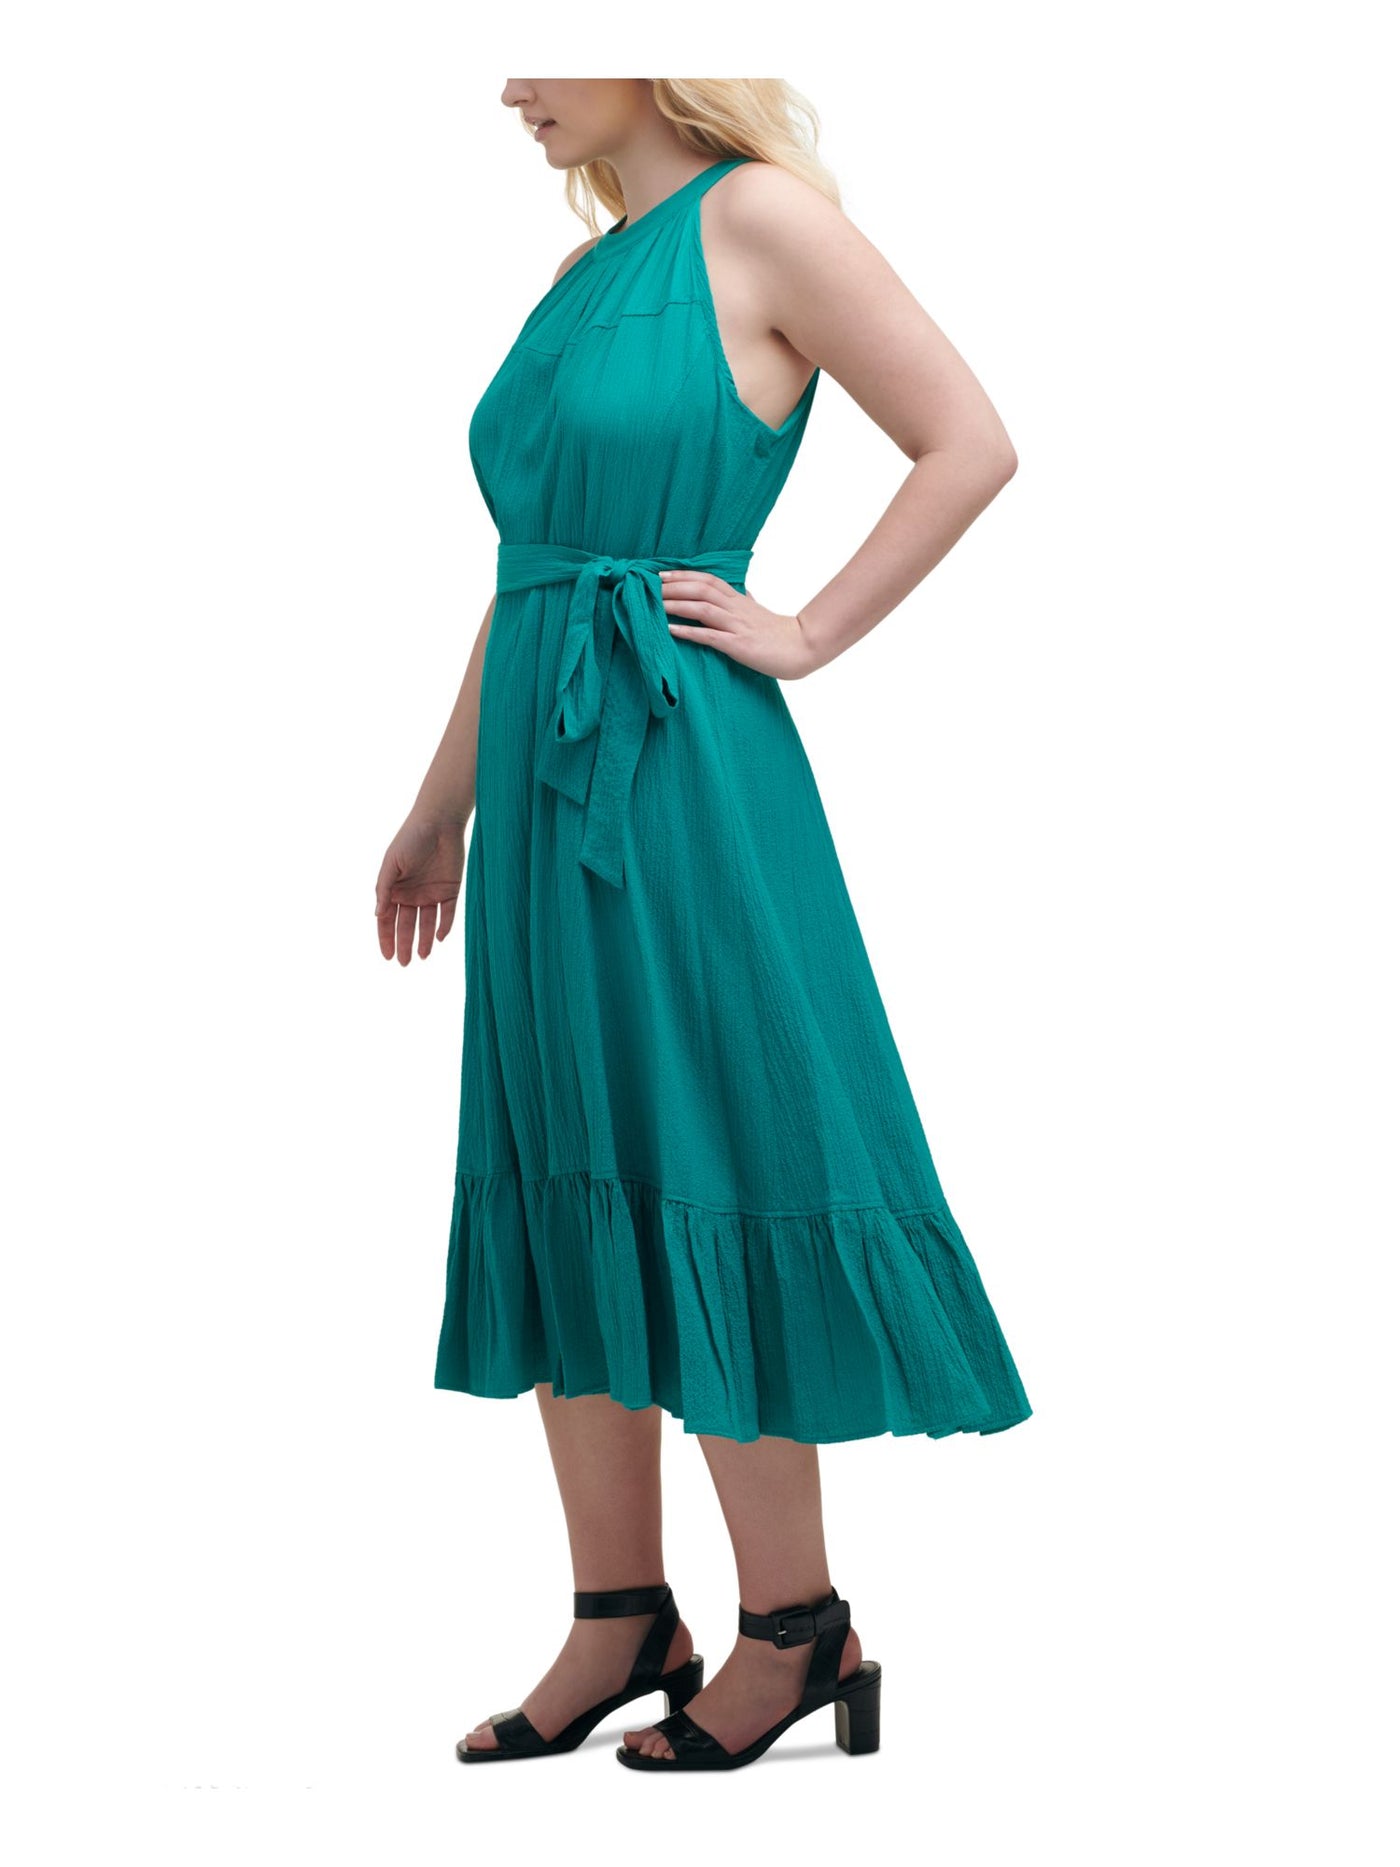 CALVIN KLEIN Womens Turquoise Stretch Zippered Ruffled Tie Gauze Sleeveless Halter Midi Party Fit + Flare Dress Plus 16W